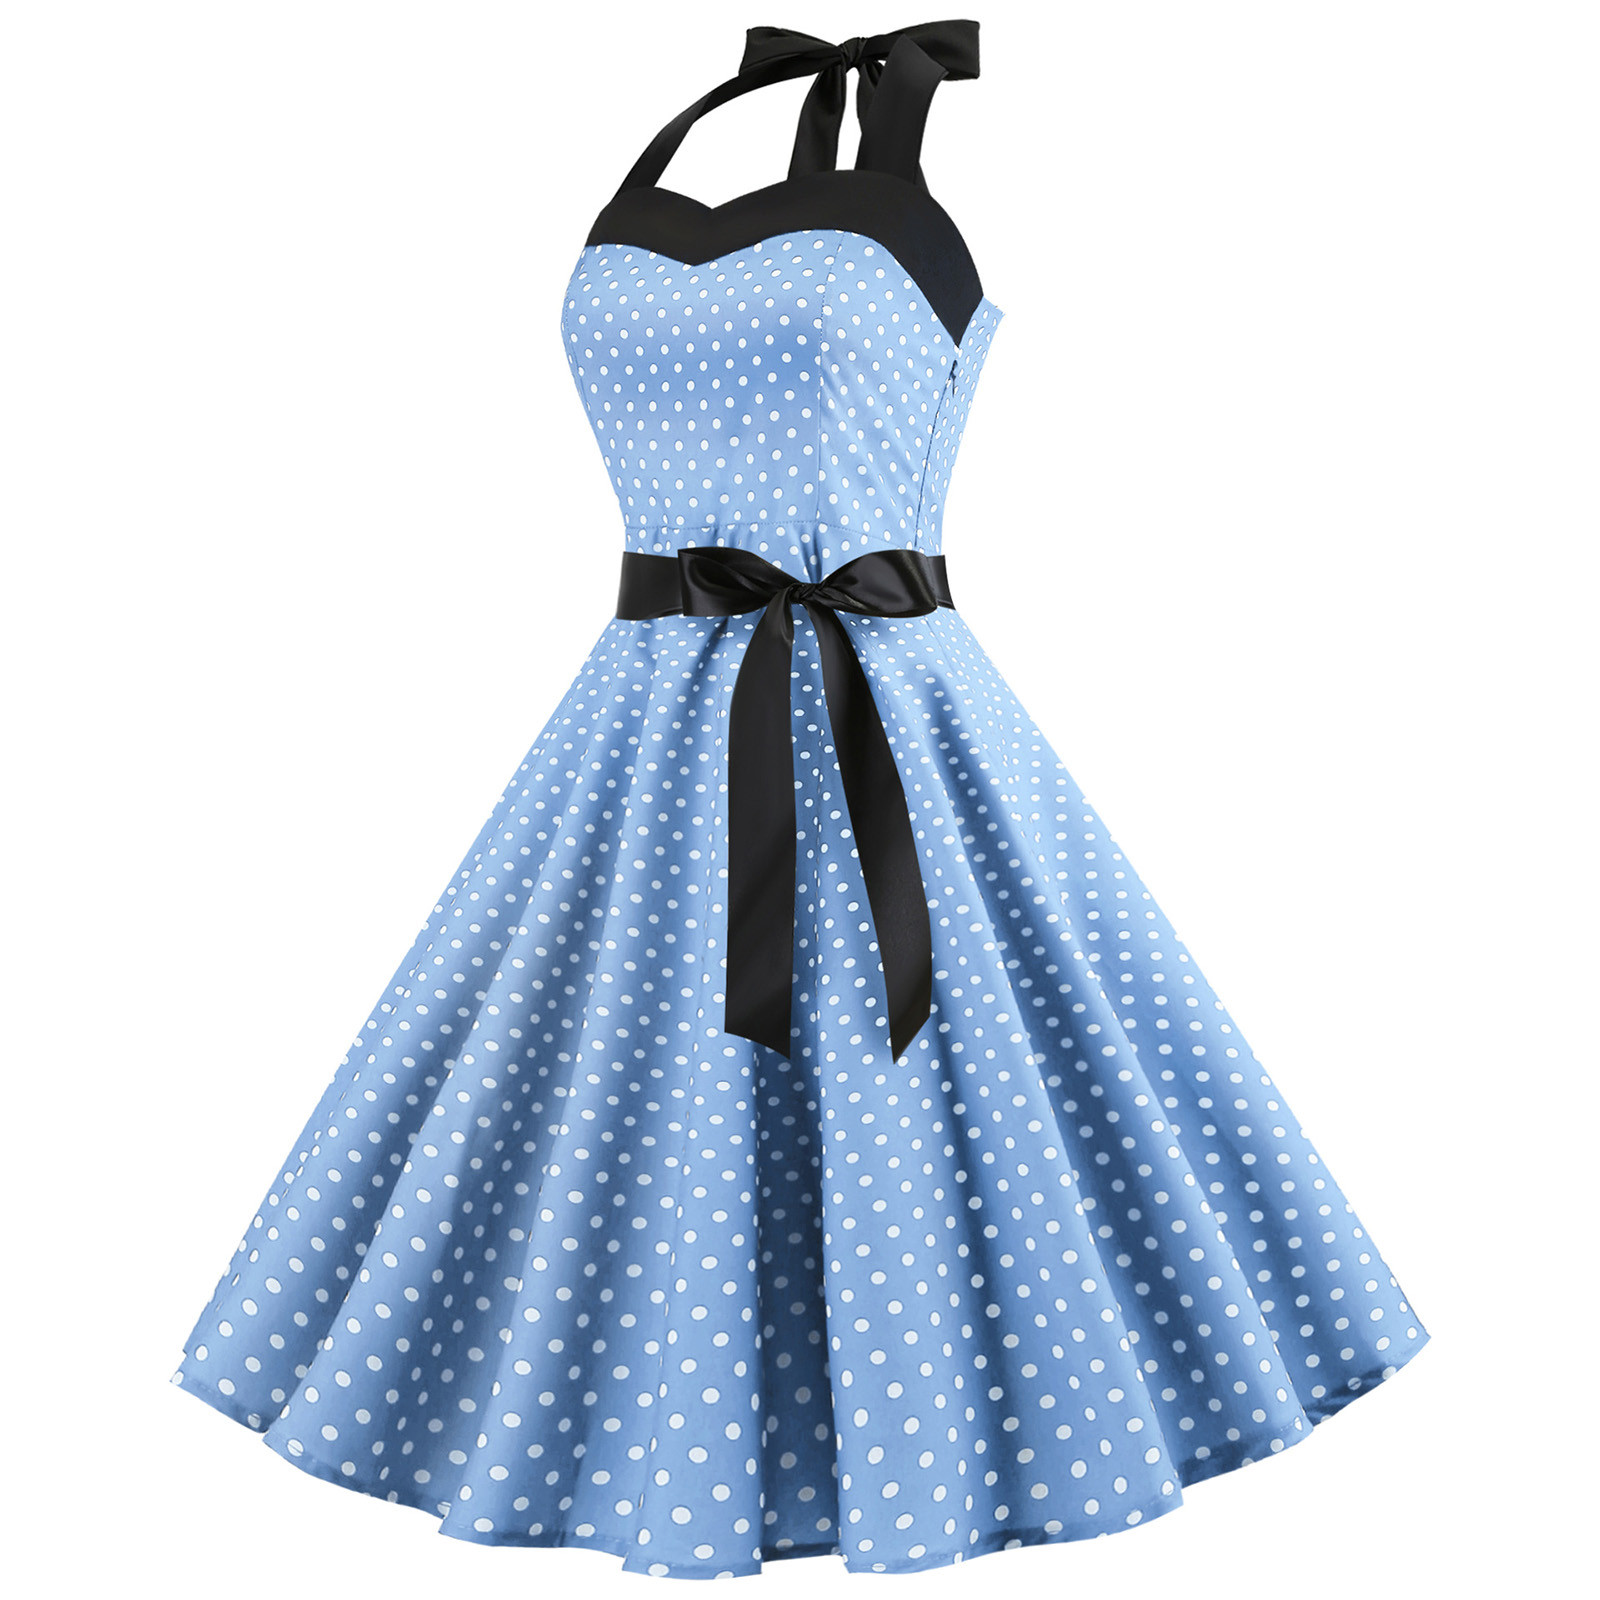 Women's Vintage Polka Dot Halter Dresses 1950s Retro Rockabilly Cocktail Swing Dresses 50s 60s Prom Dress Tea Length - image 1 of 8